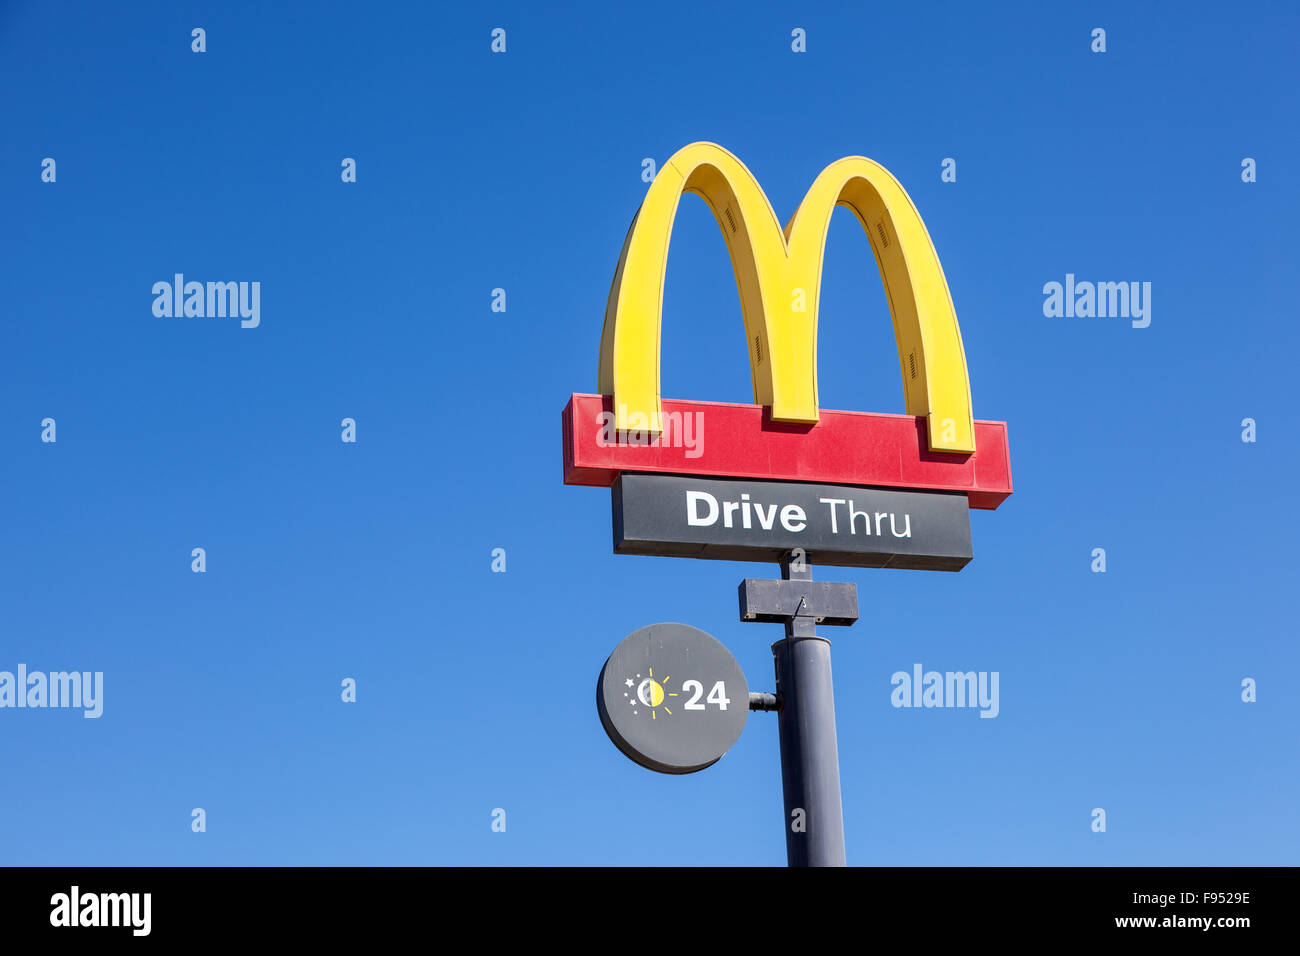 McDonald's fast food restaurant logo Stock Photo